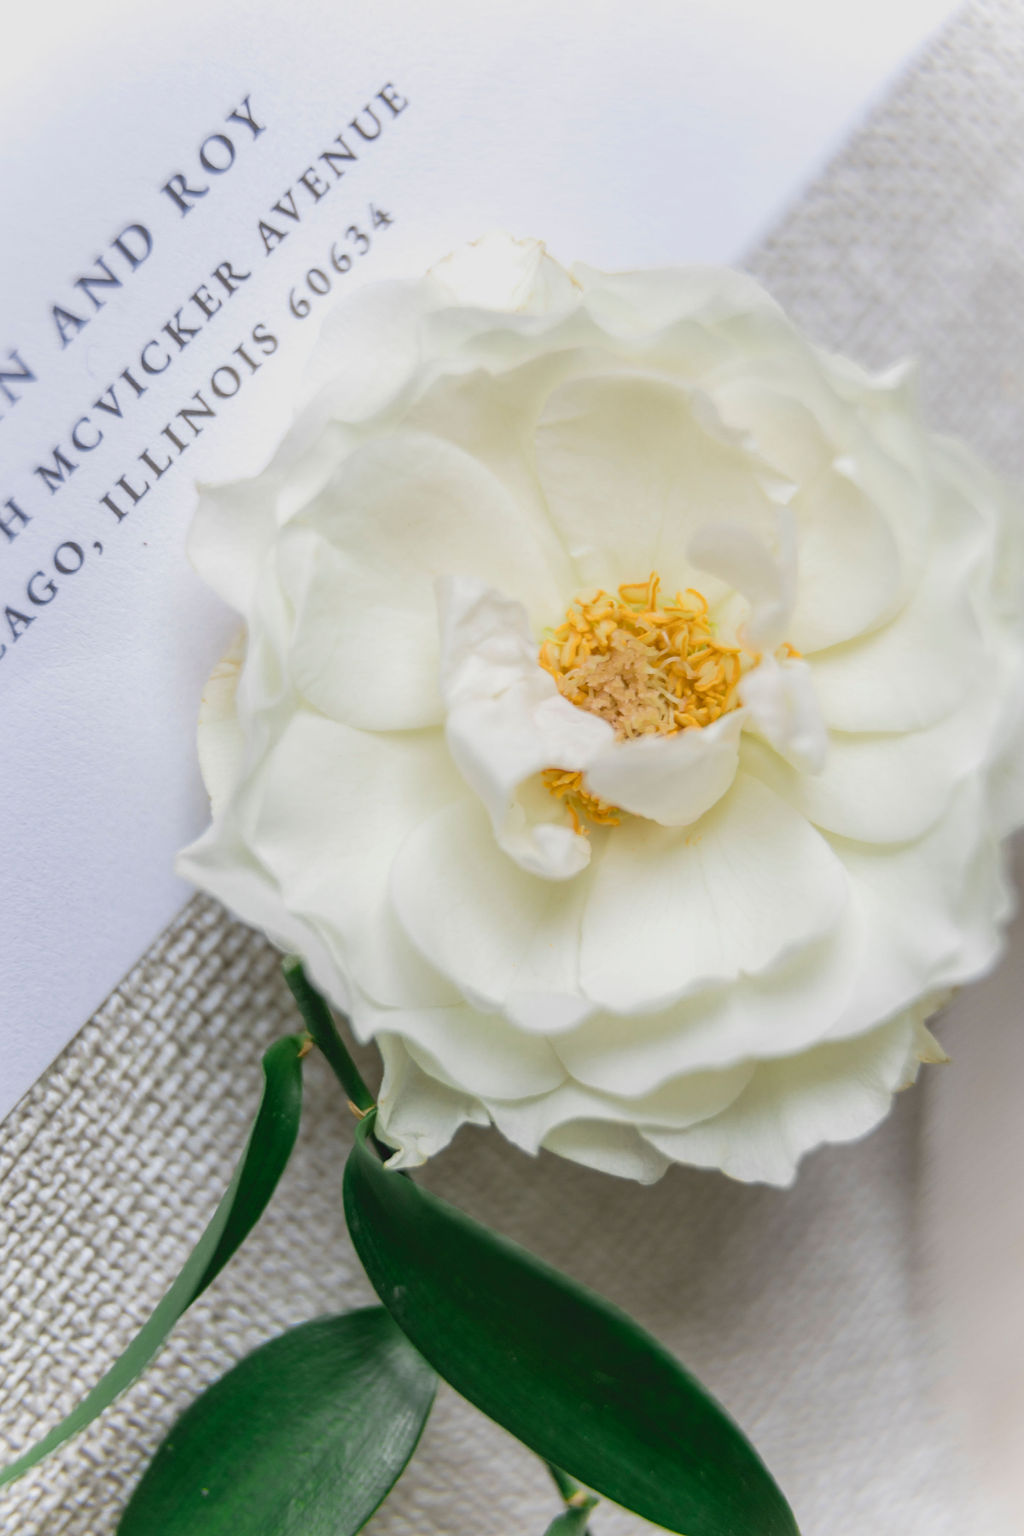 Bridal Details Checklist